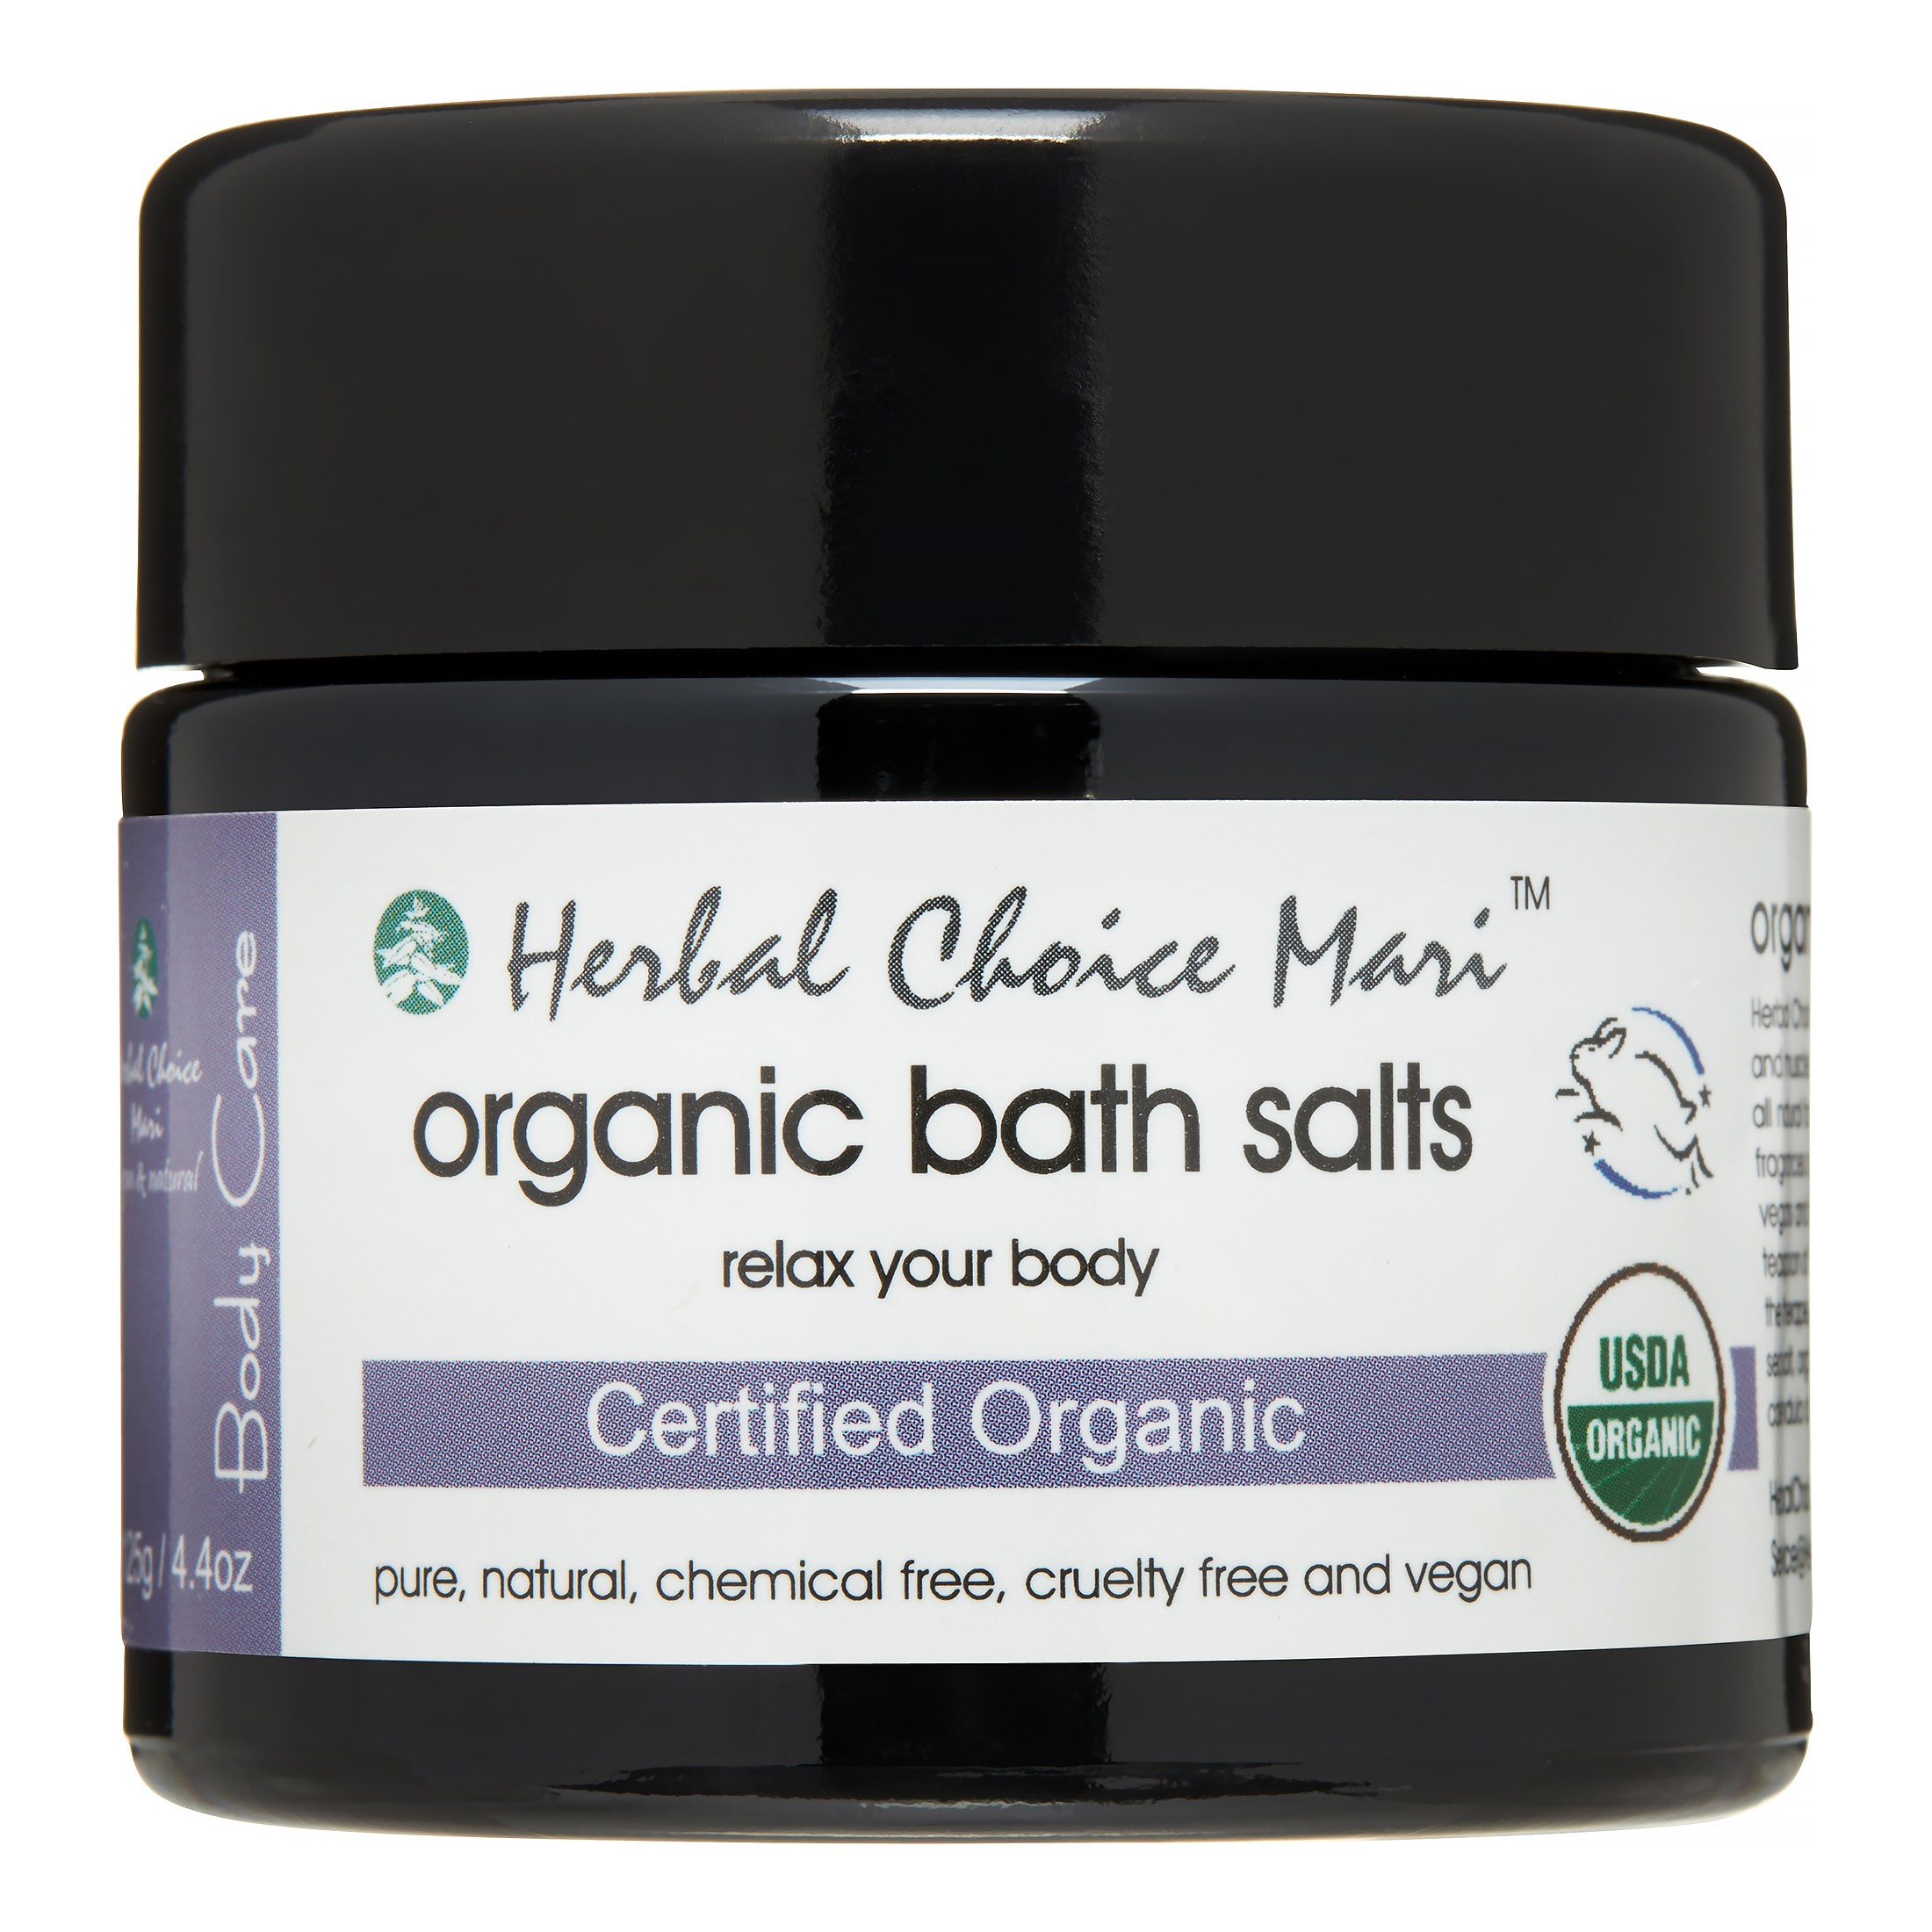 Herbal Choice Mari Organic Bath Salts Relax Your Body 125g/ 4.4oz Glass Jar